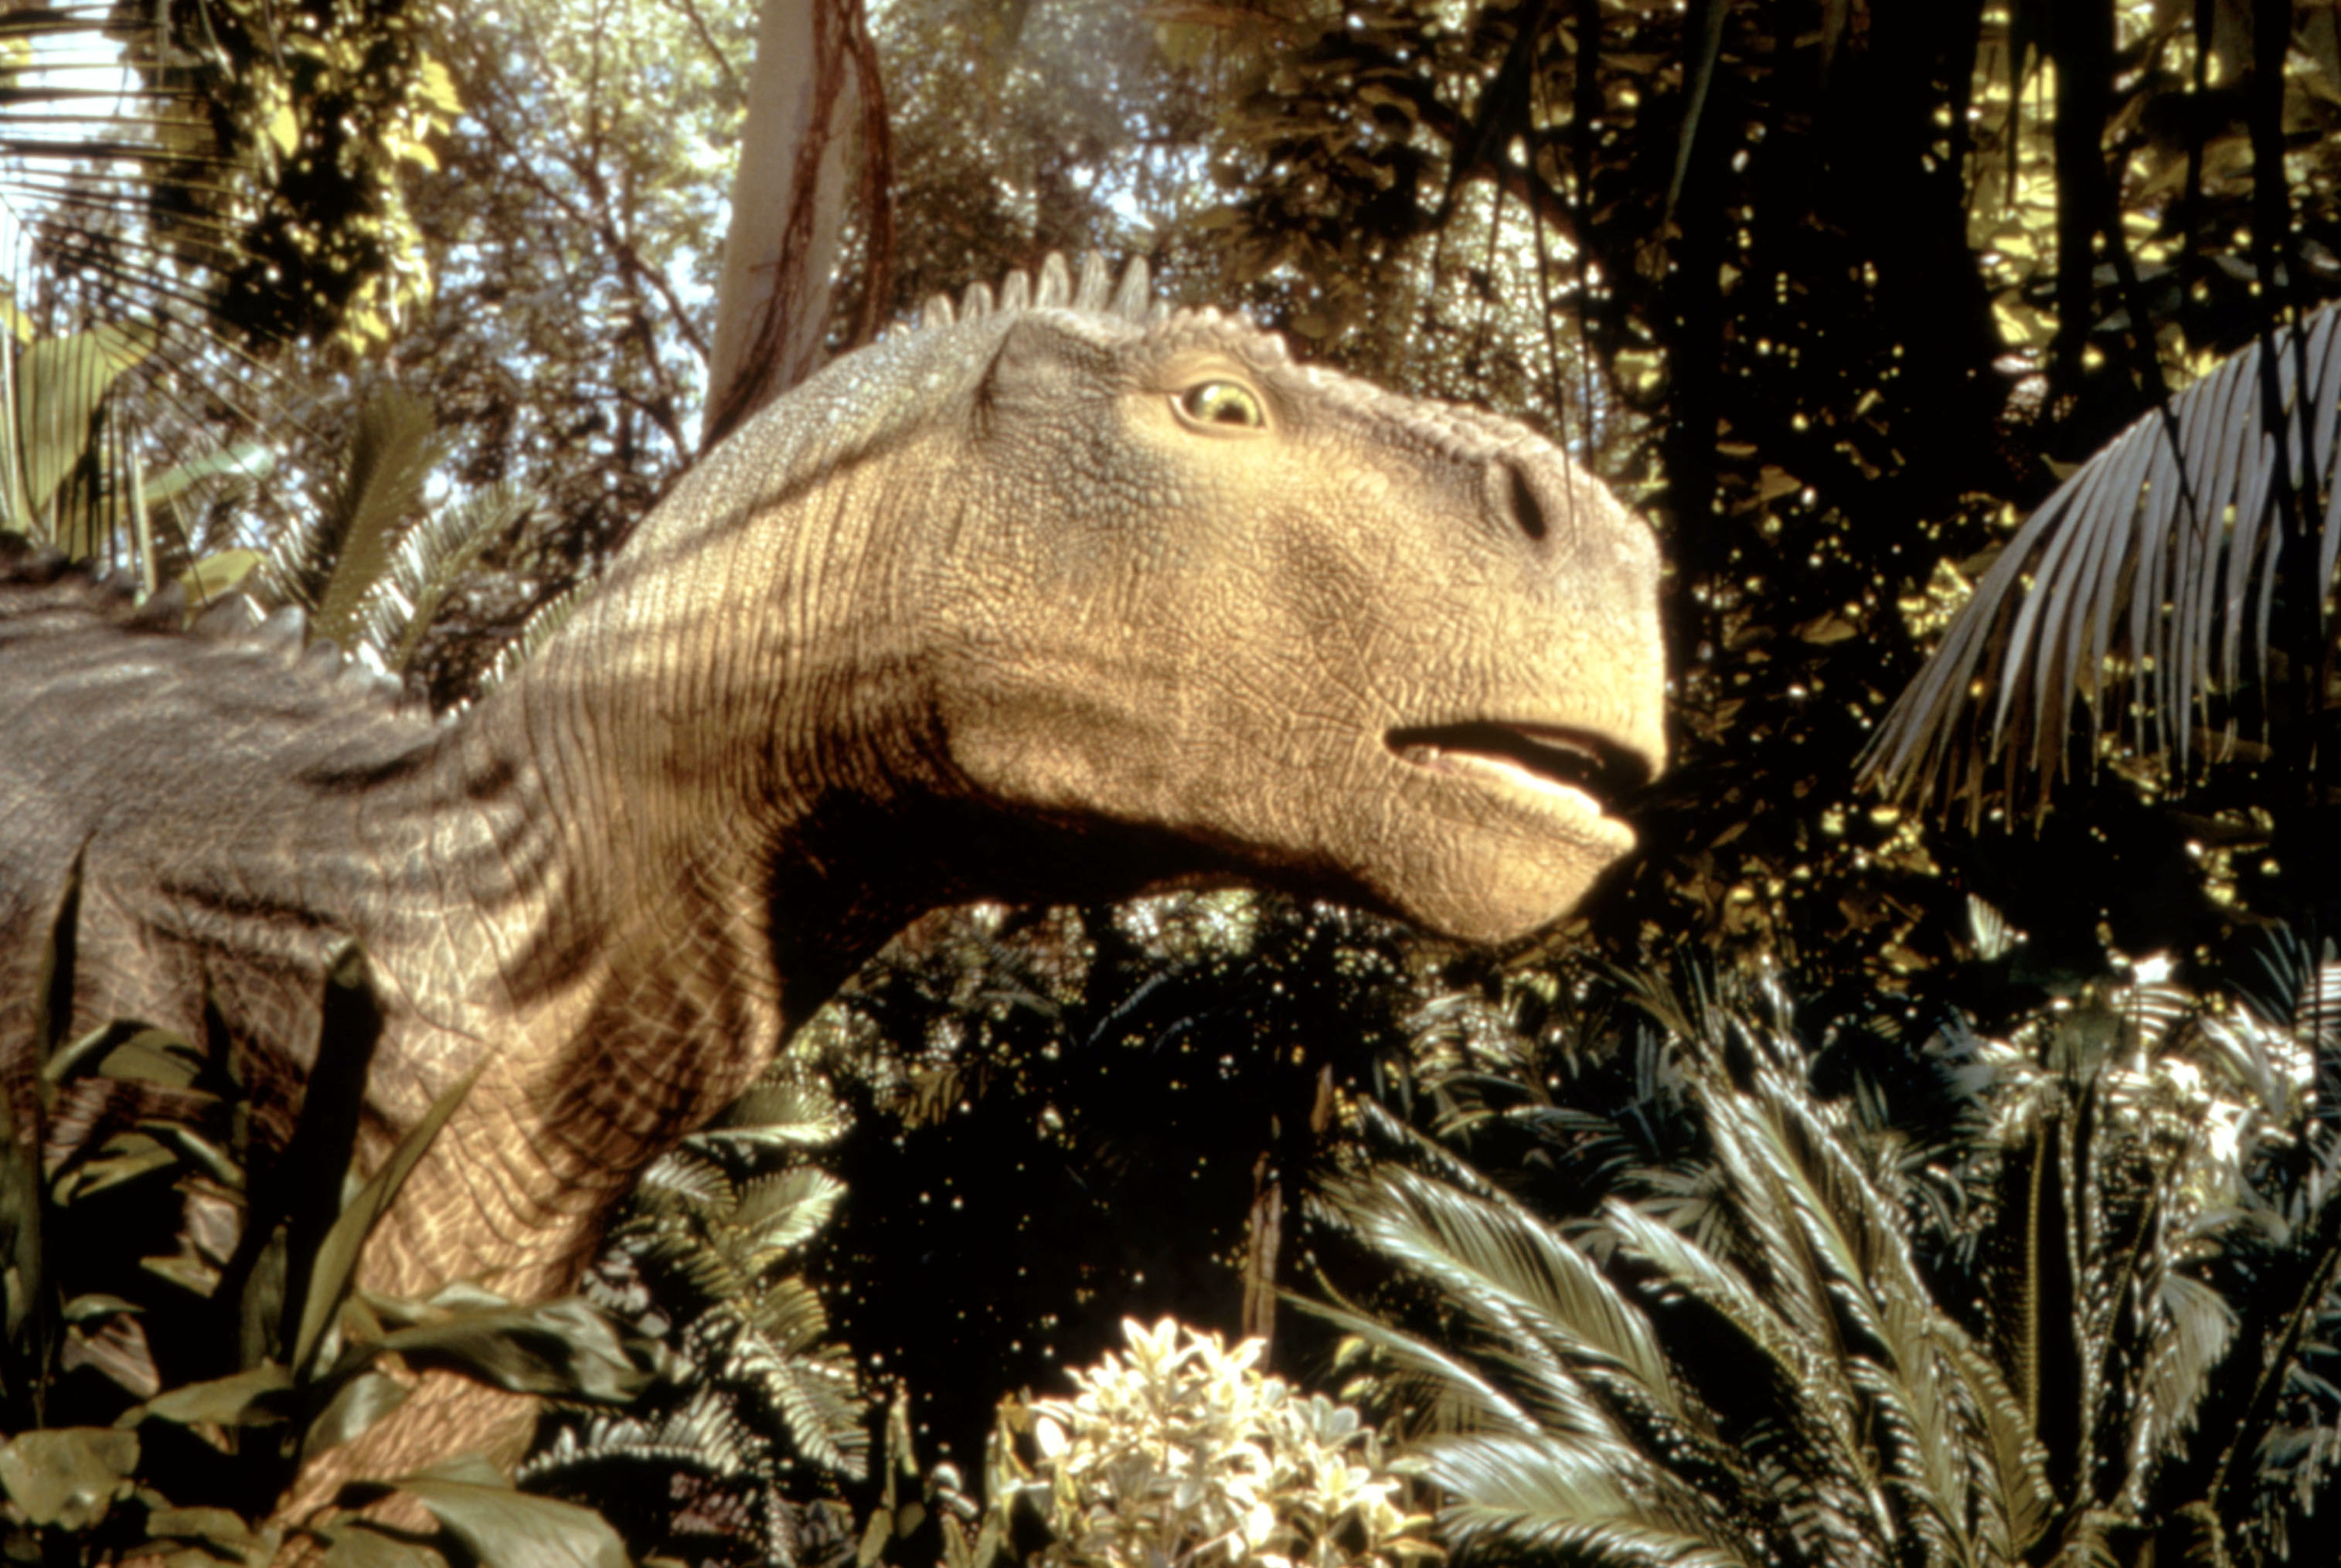 A CGI dinosaur from the movie Dinosaur is shown among dense jungle foliage